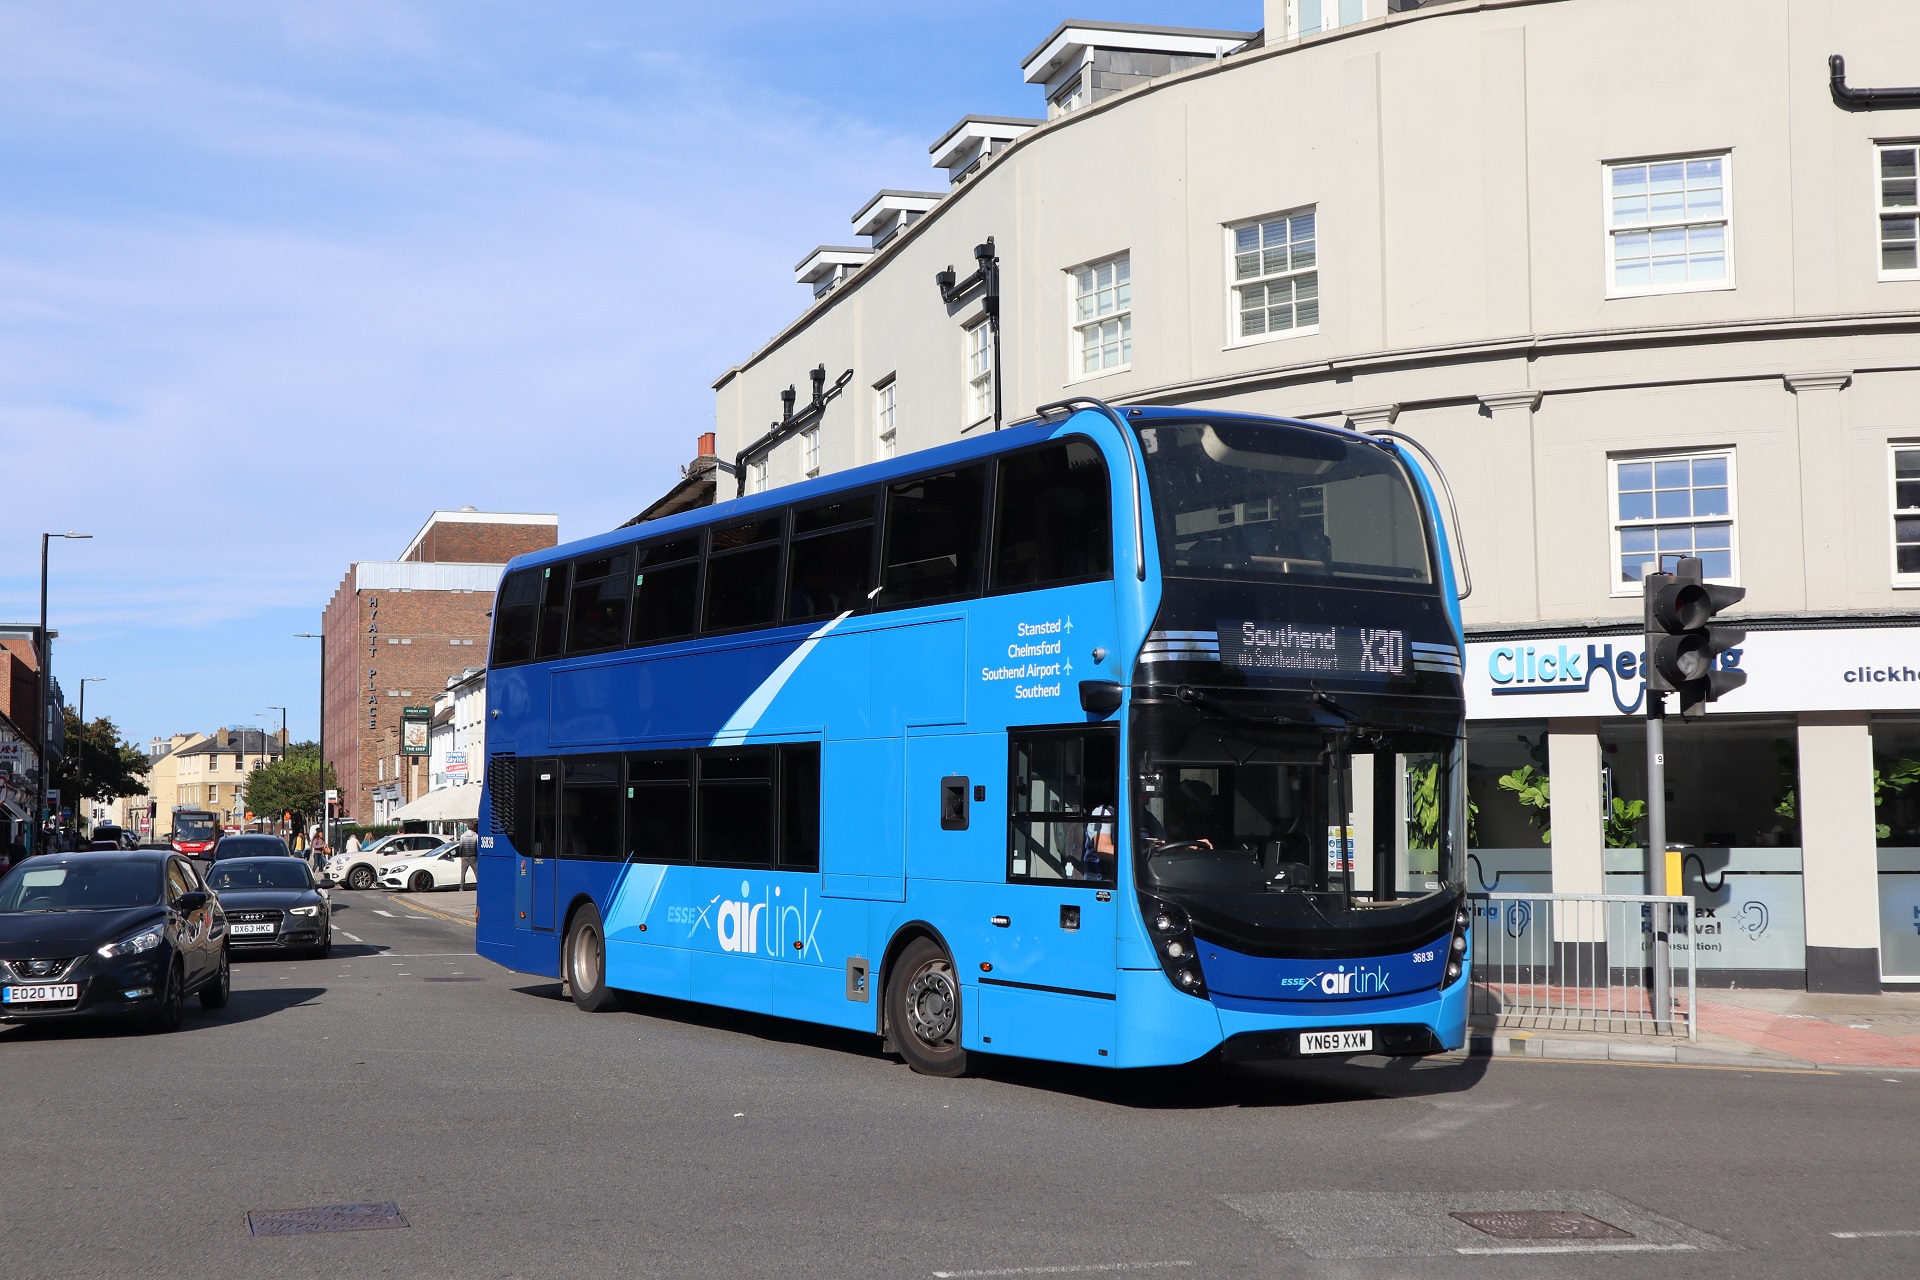 Bus Service Improvement Plan Plus allocations confirmed